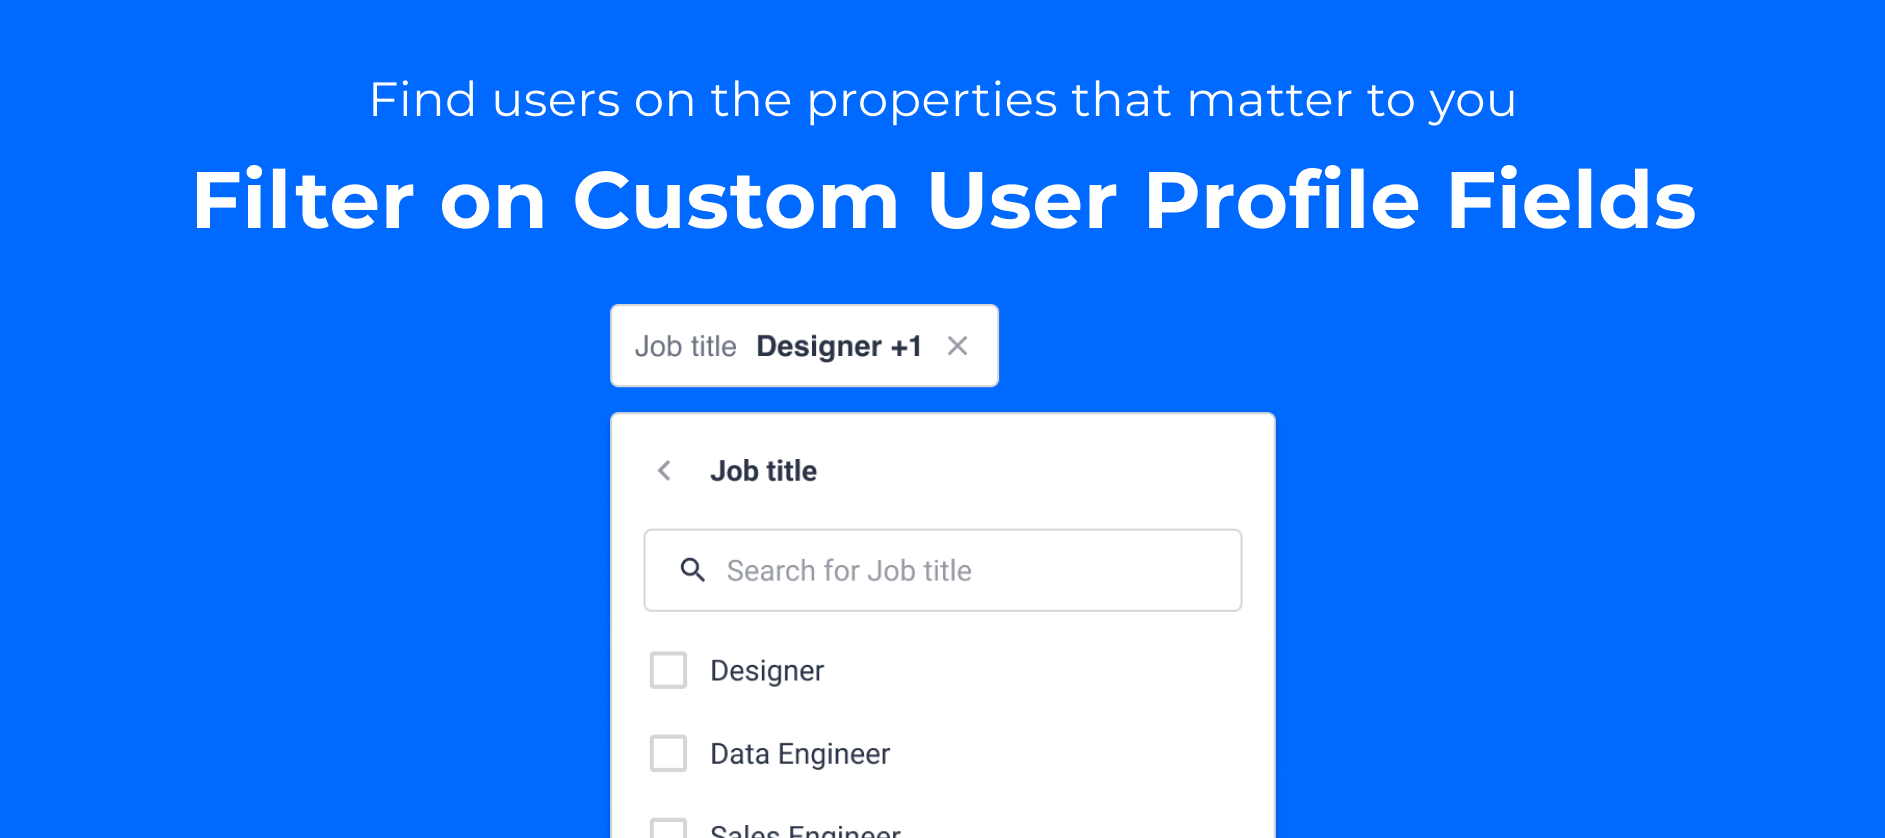 Filter on Custom User Profile Fields